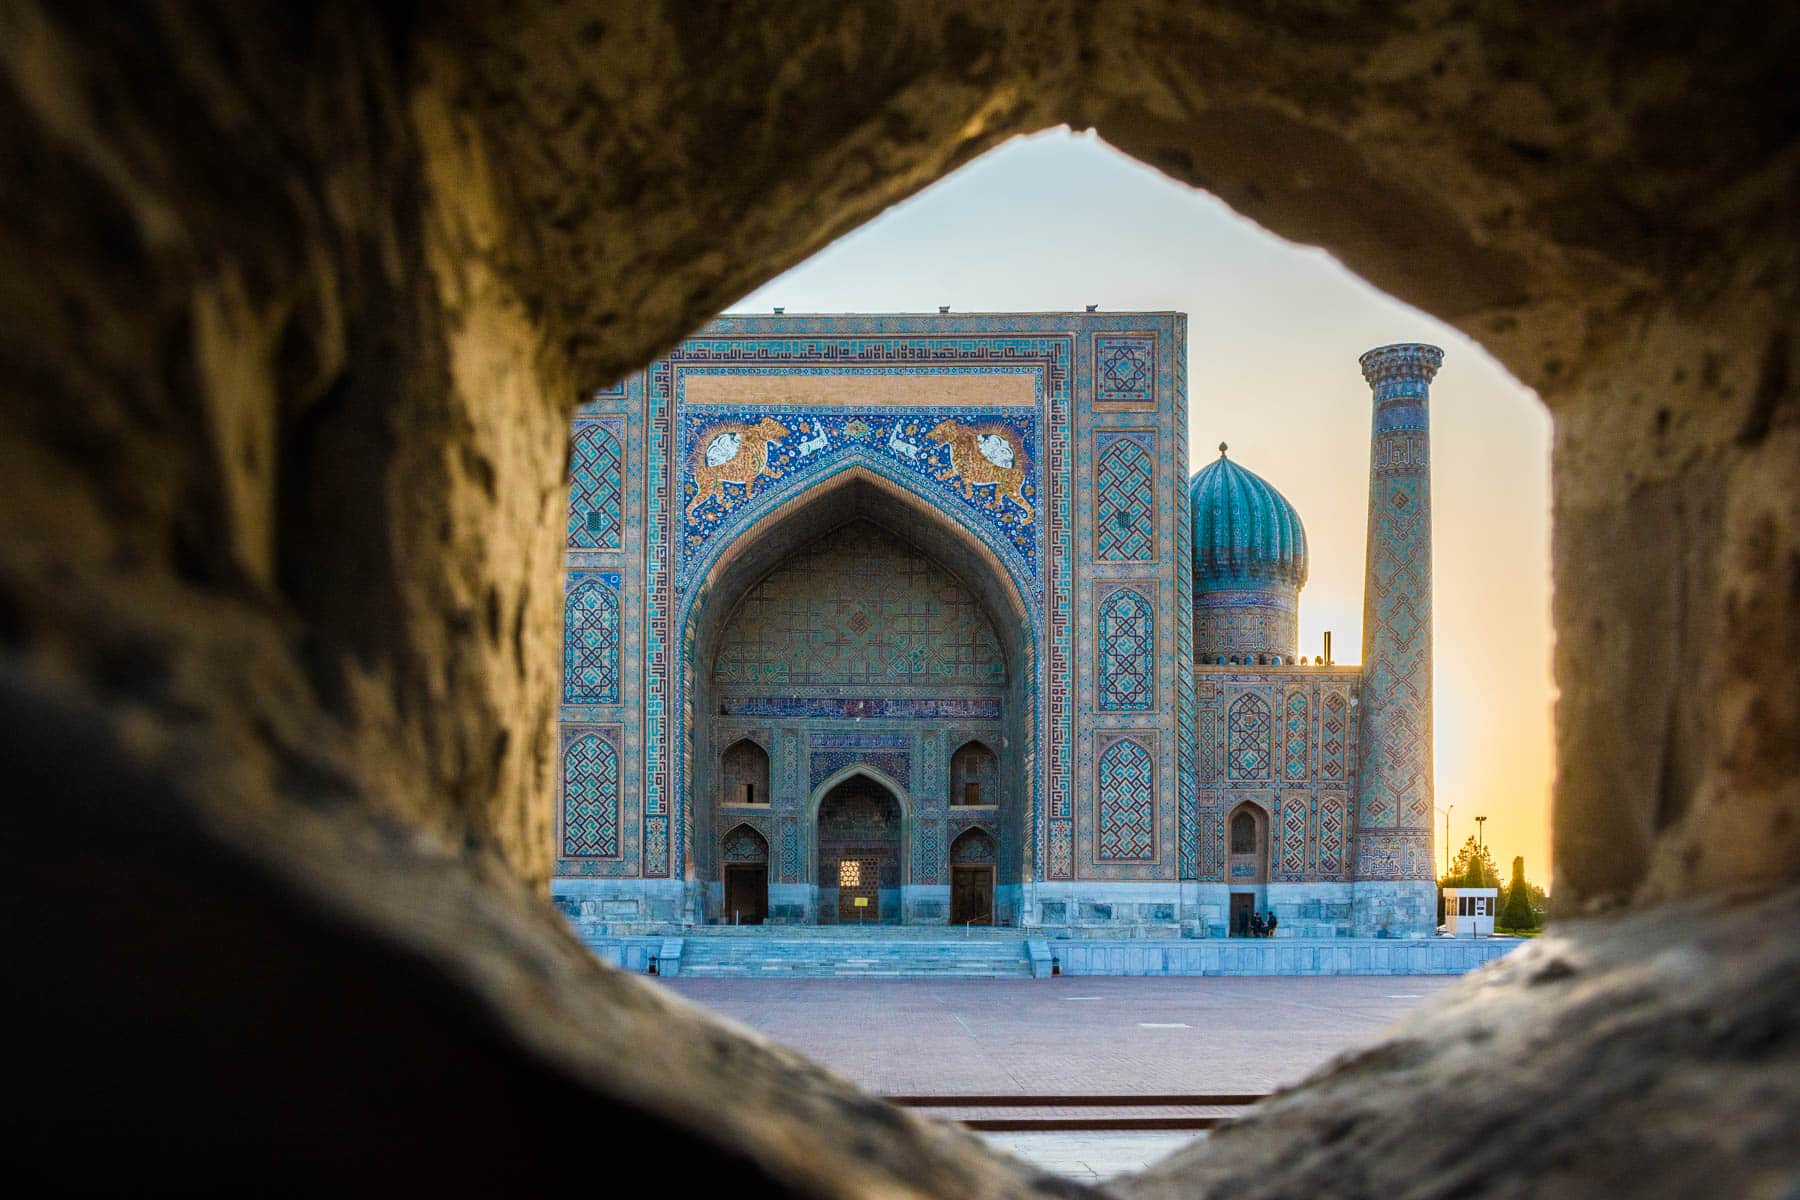 Sunrise at the Registan in Samarkand, Uzbekistan